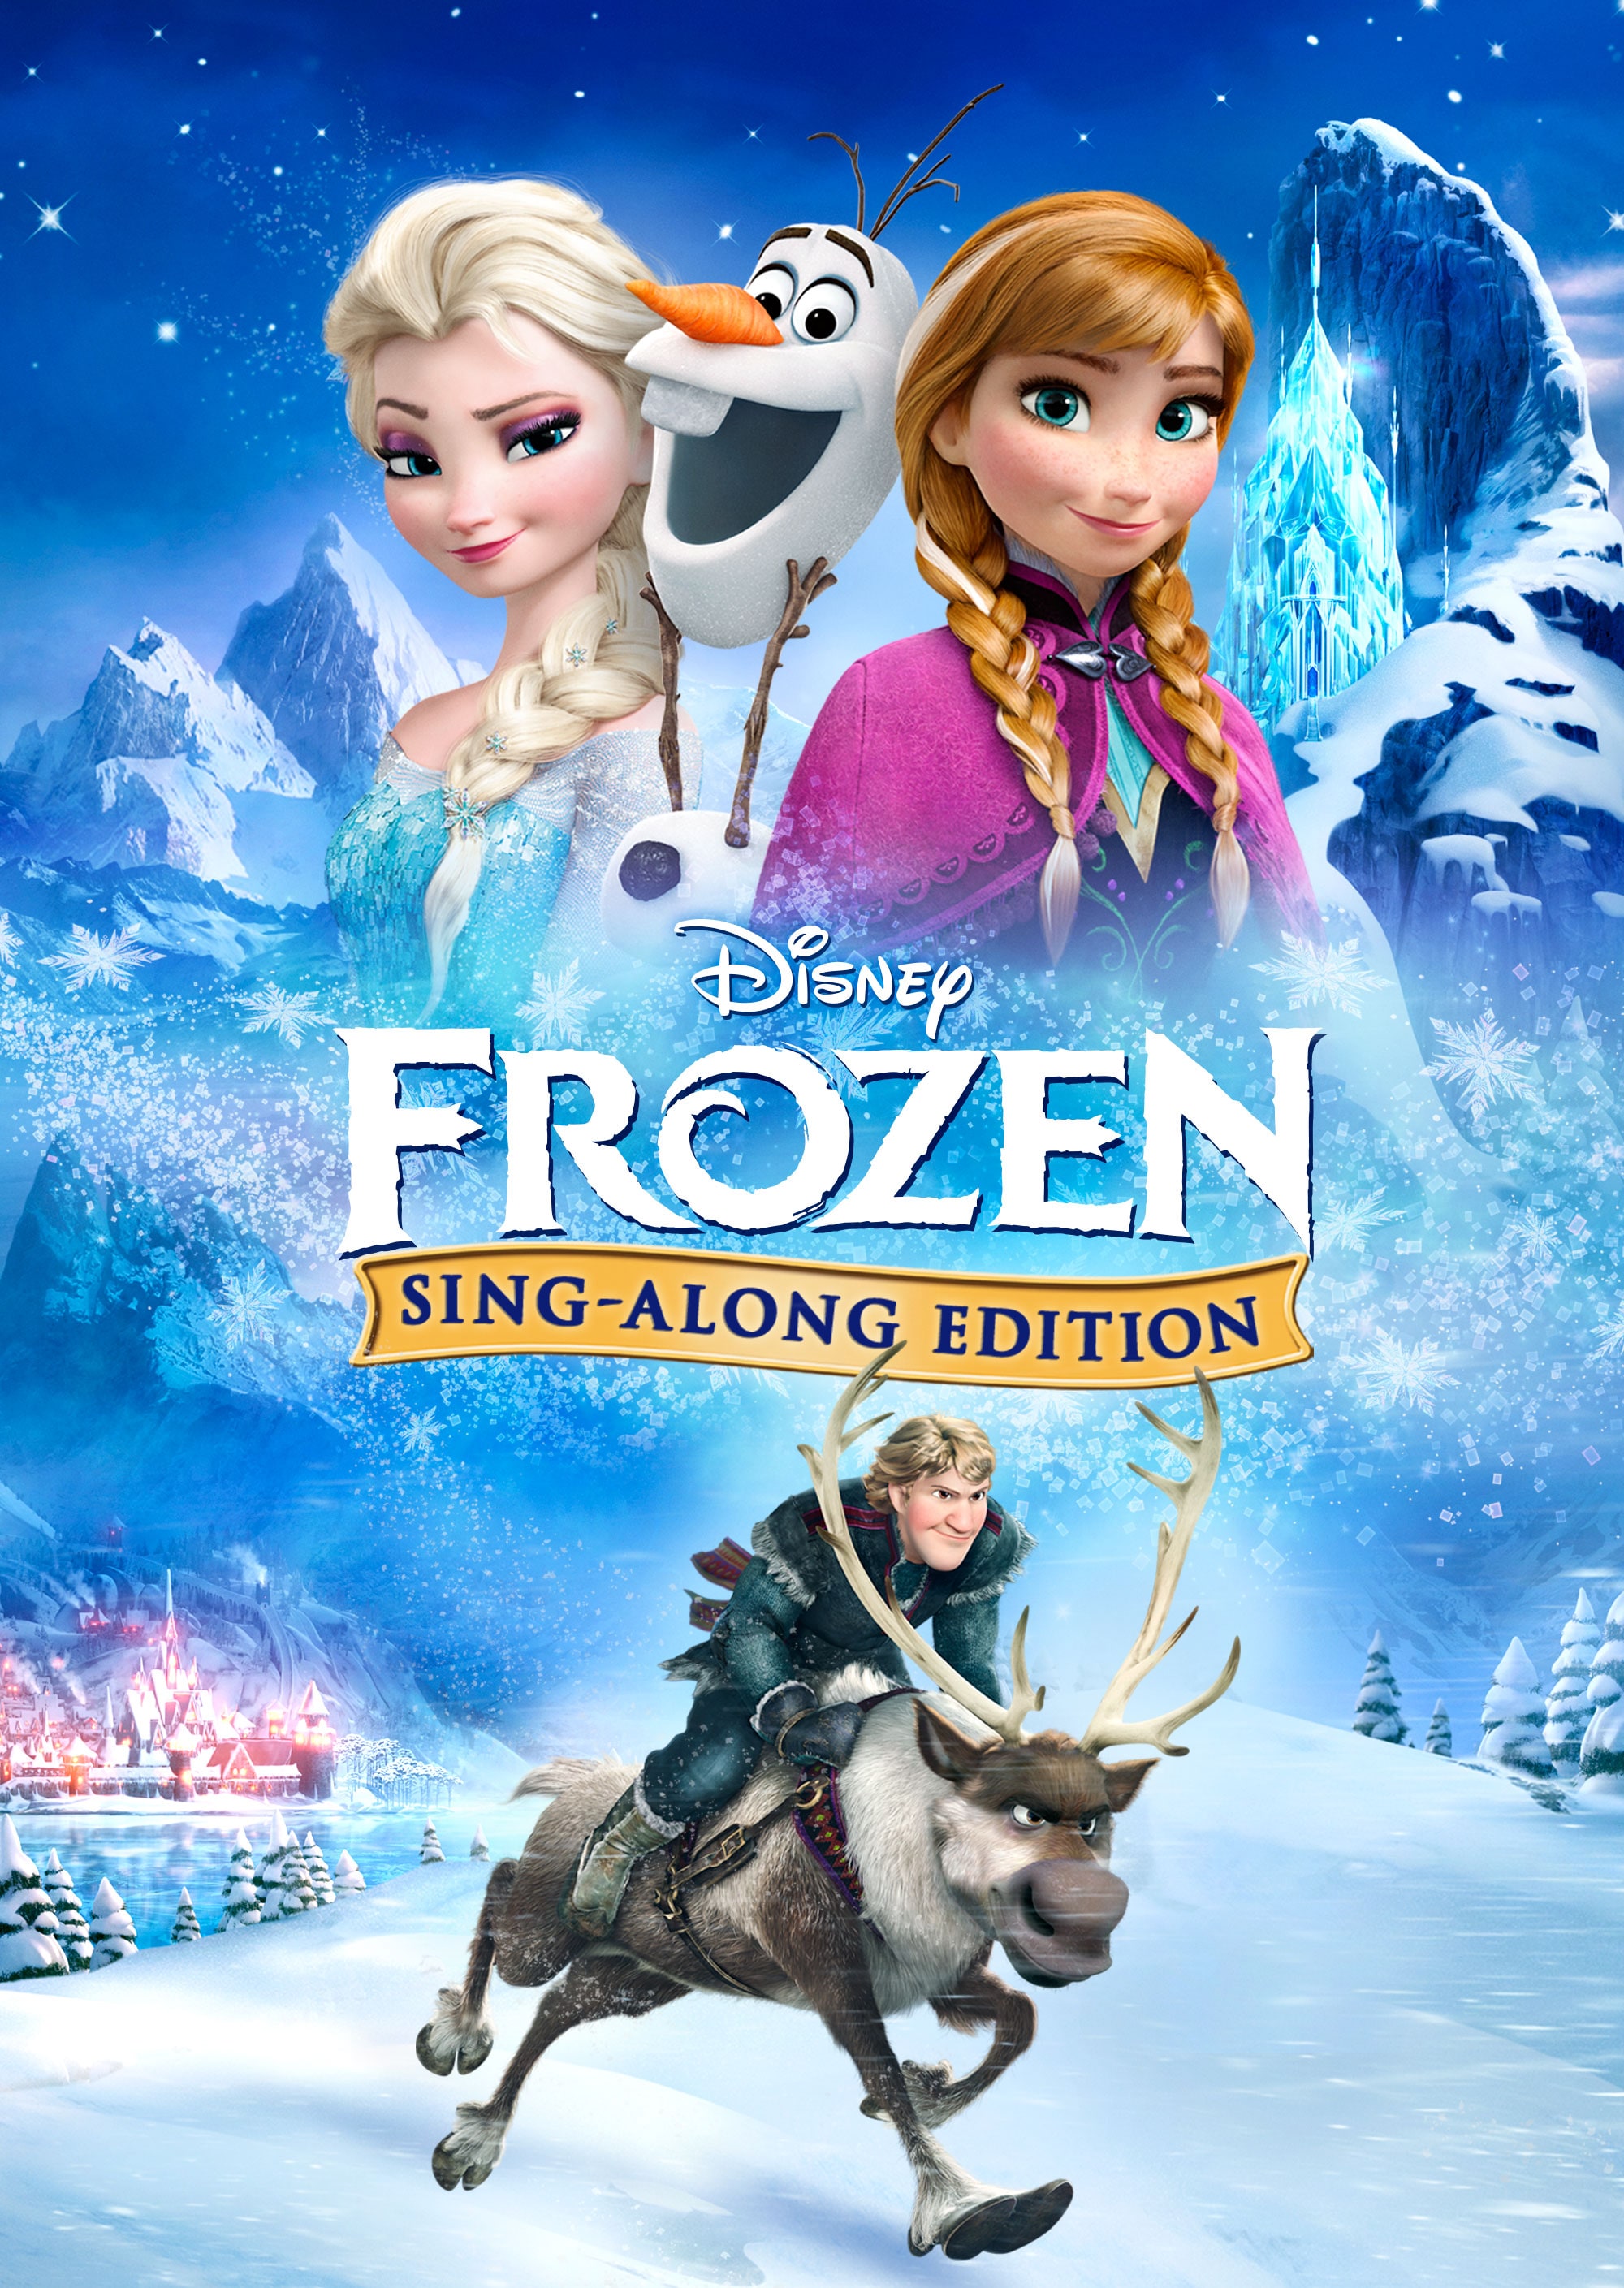 Disney | Frozen Sing-Along Edition movie poster